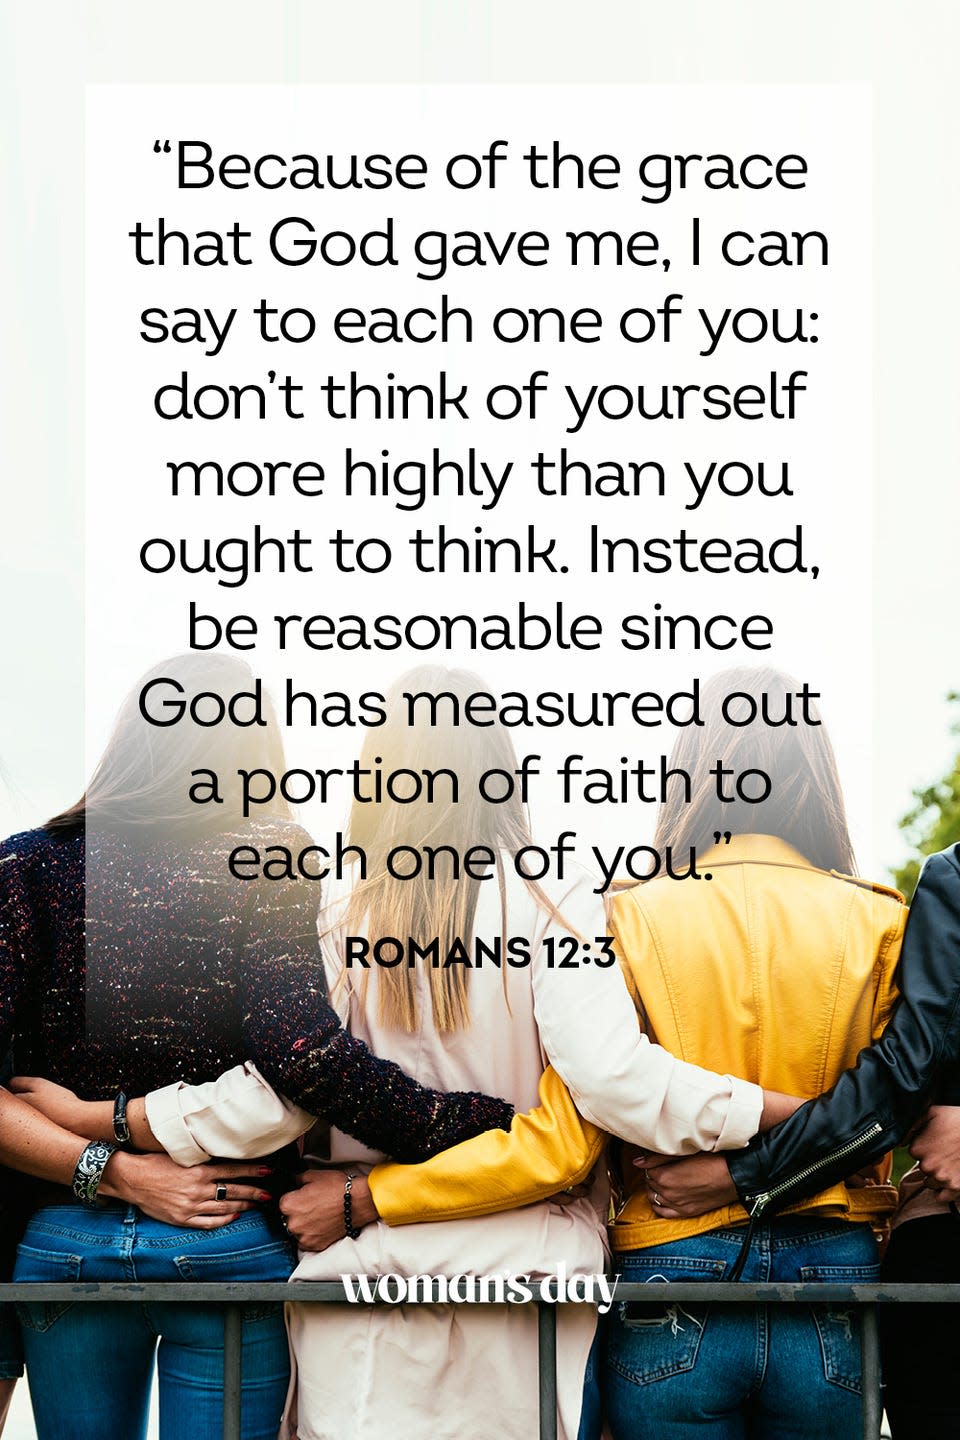 21) Romans 12:3